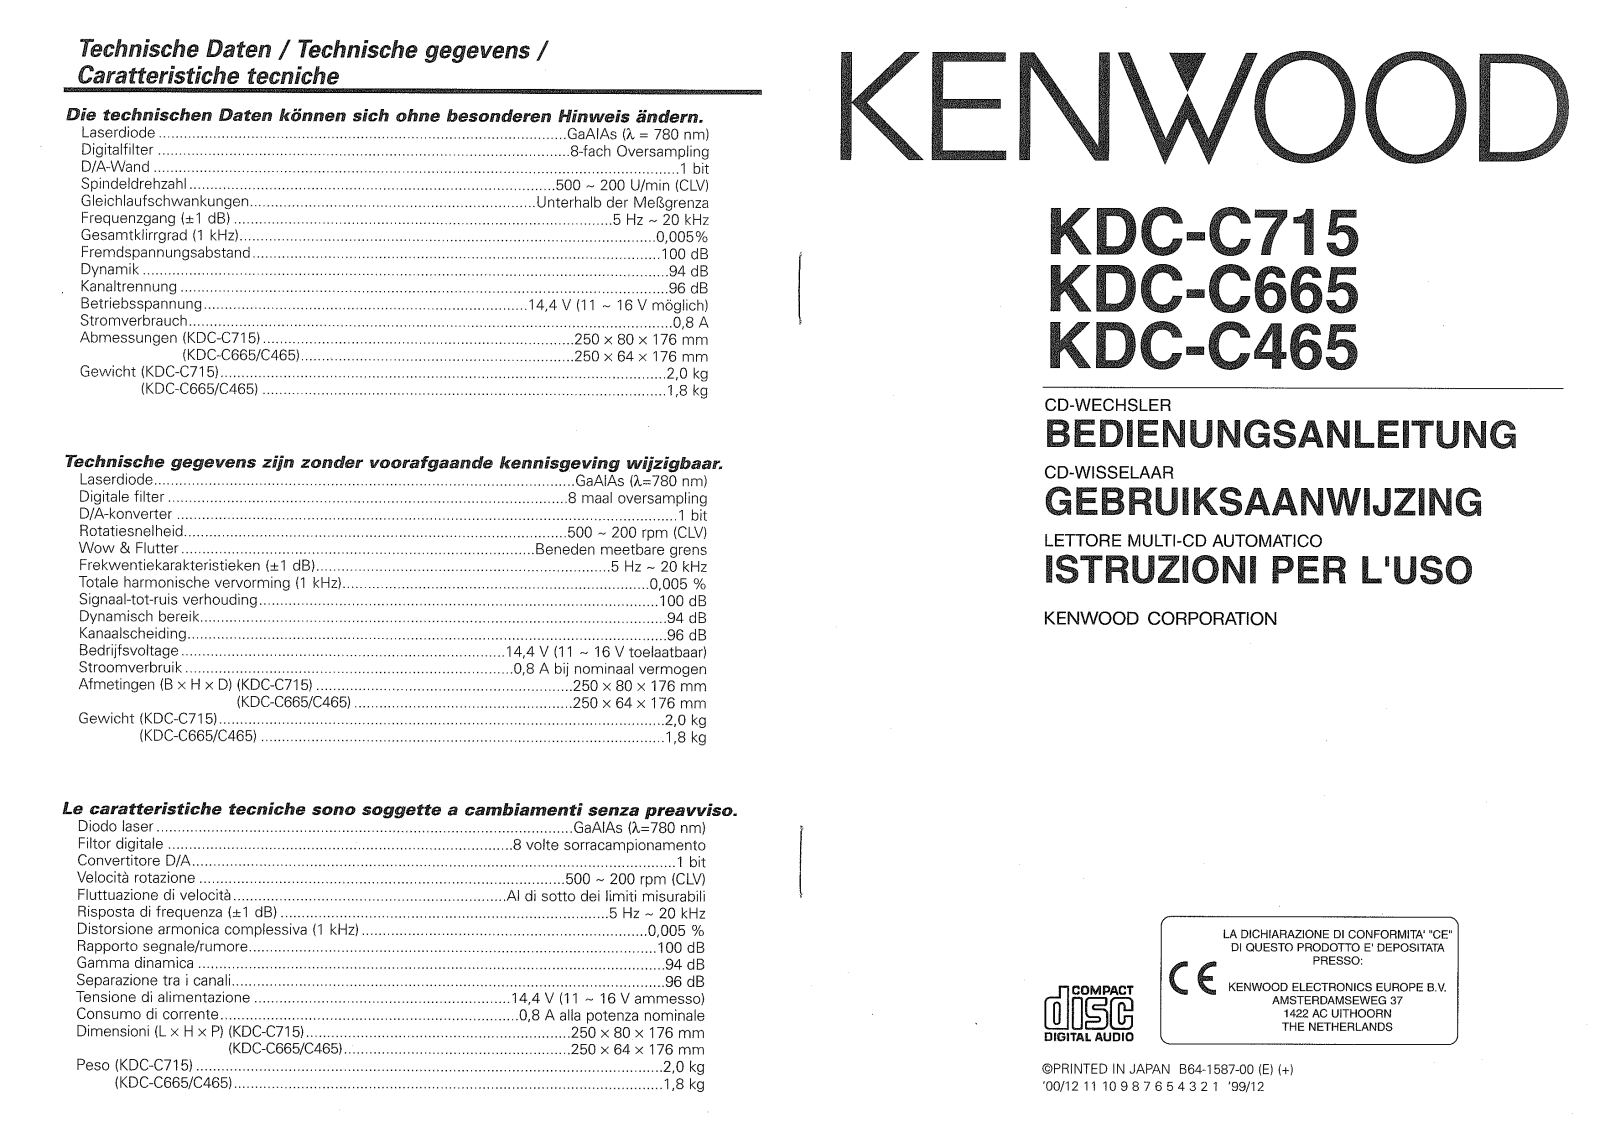 Kenwood KDC-C715 User's Manual